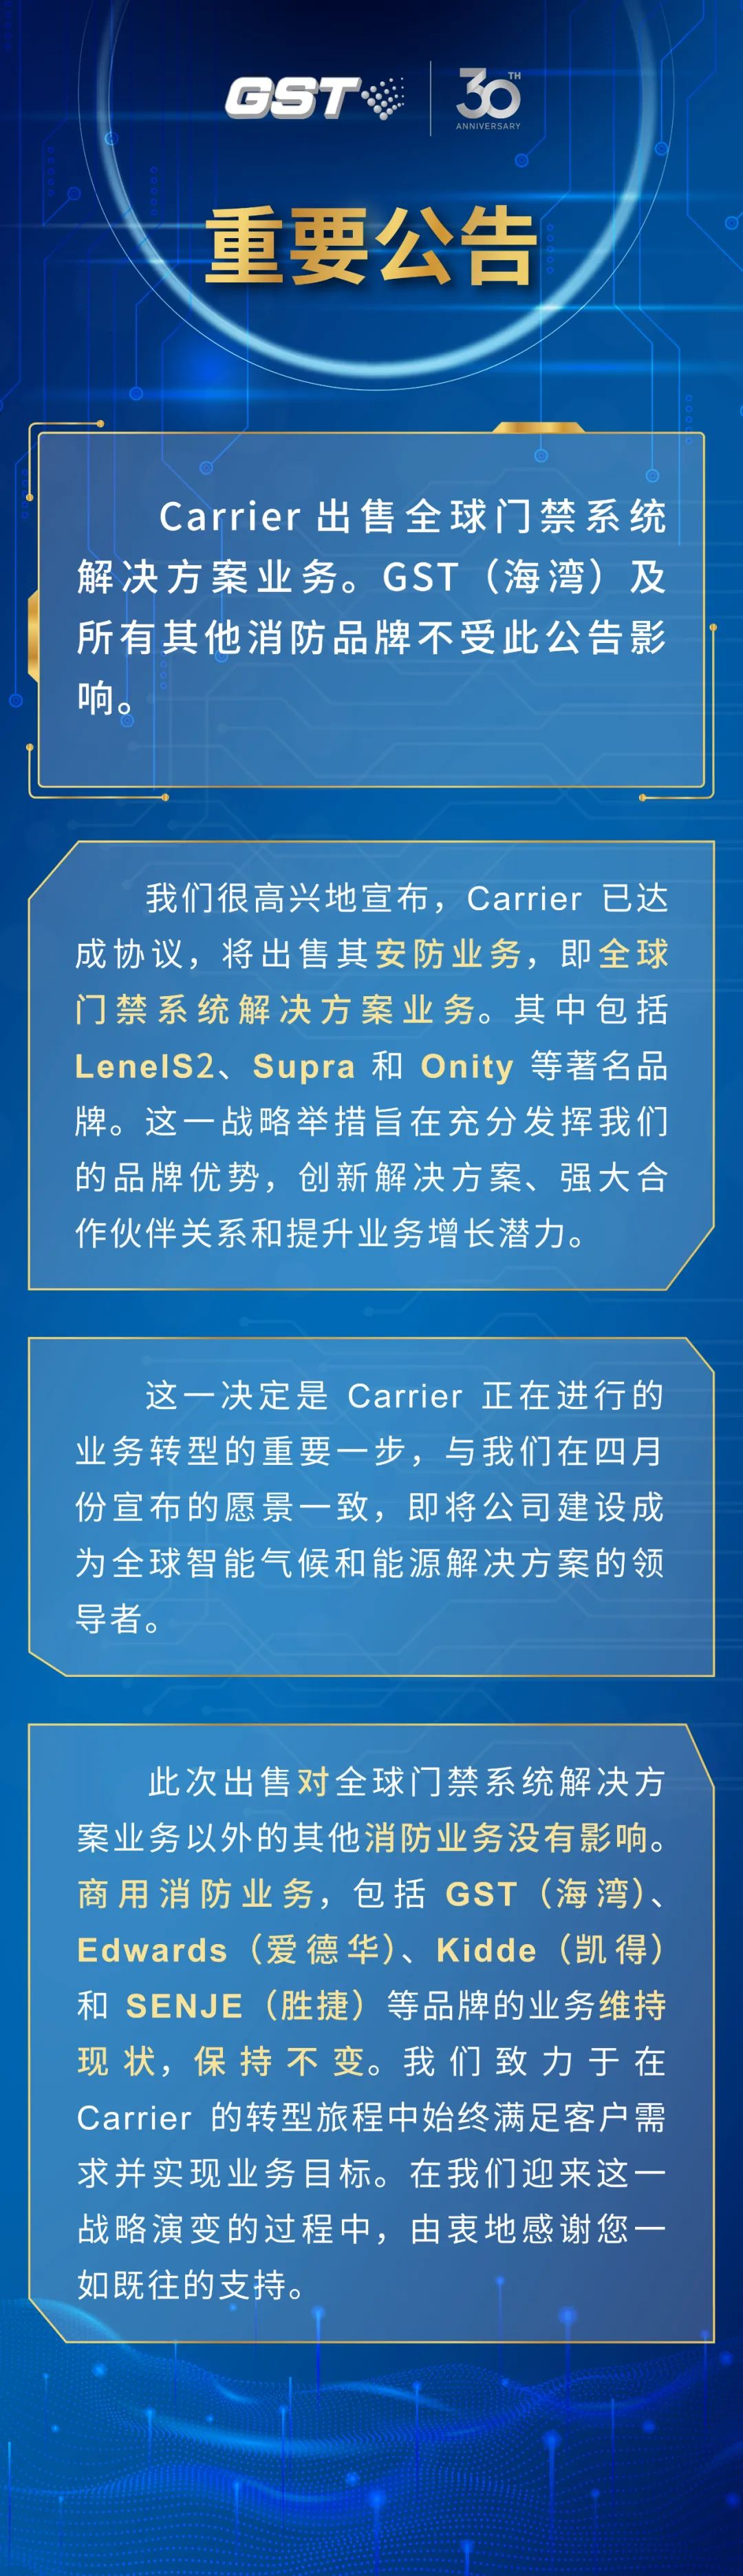 Carrier 出售方案不包含GST（黑龙江海湾）及所有其他消防品牌